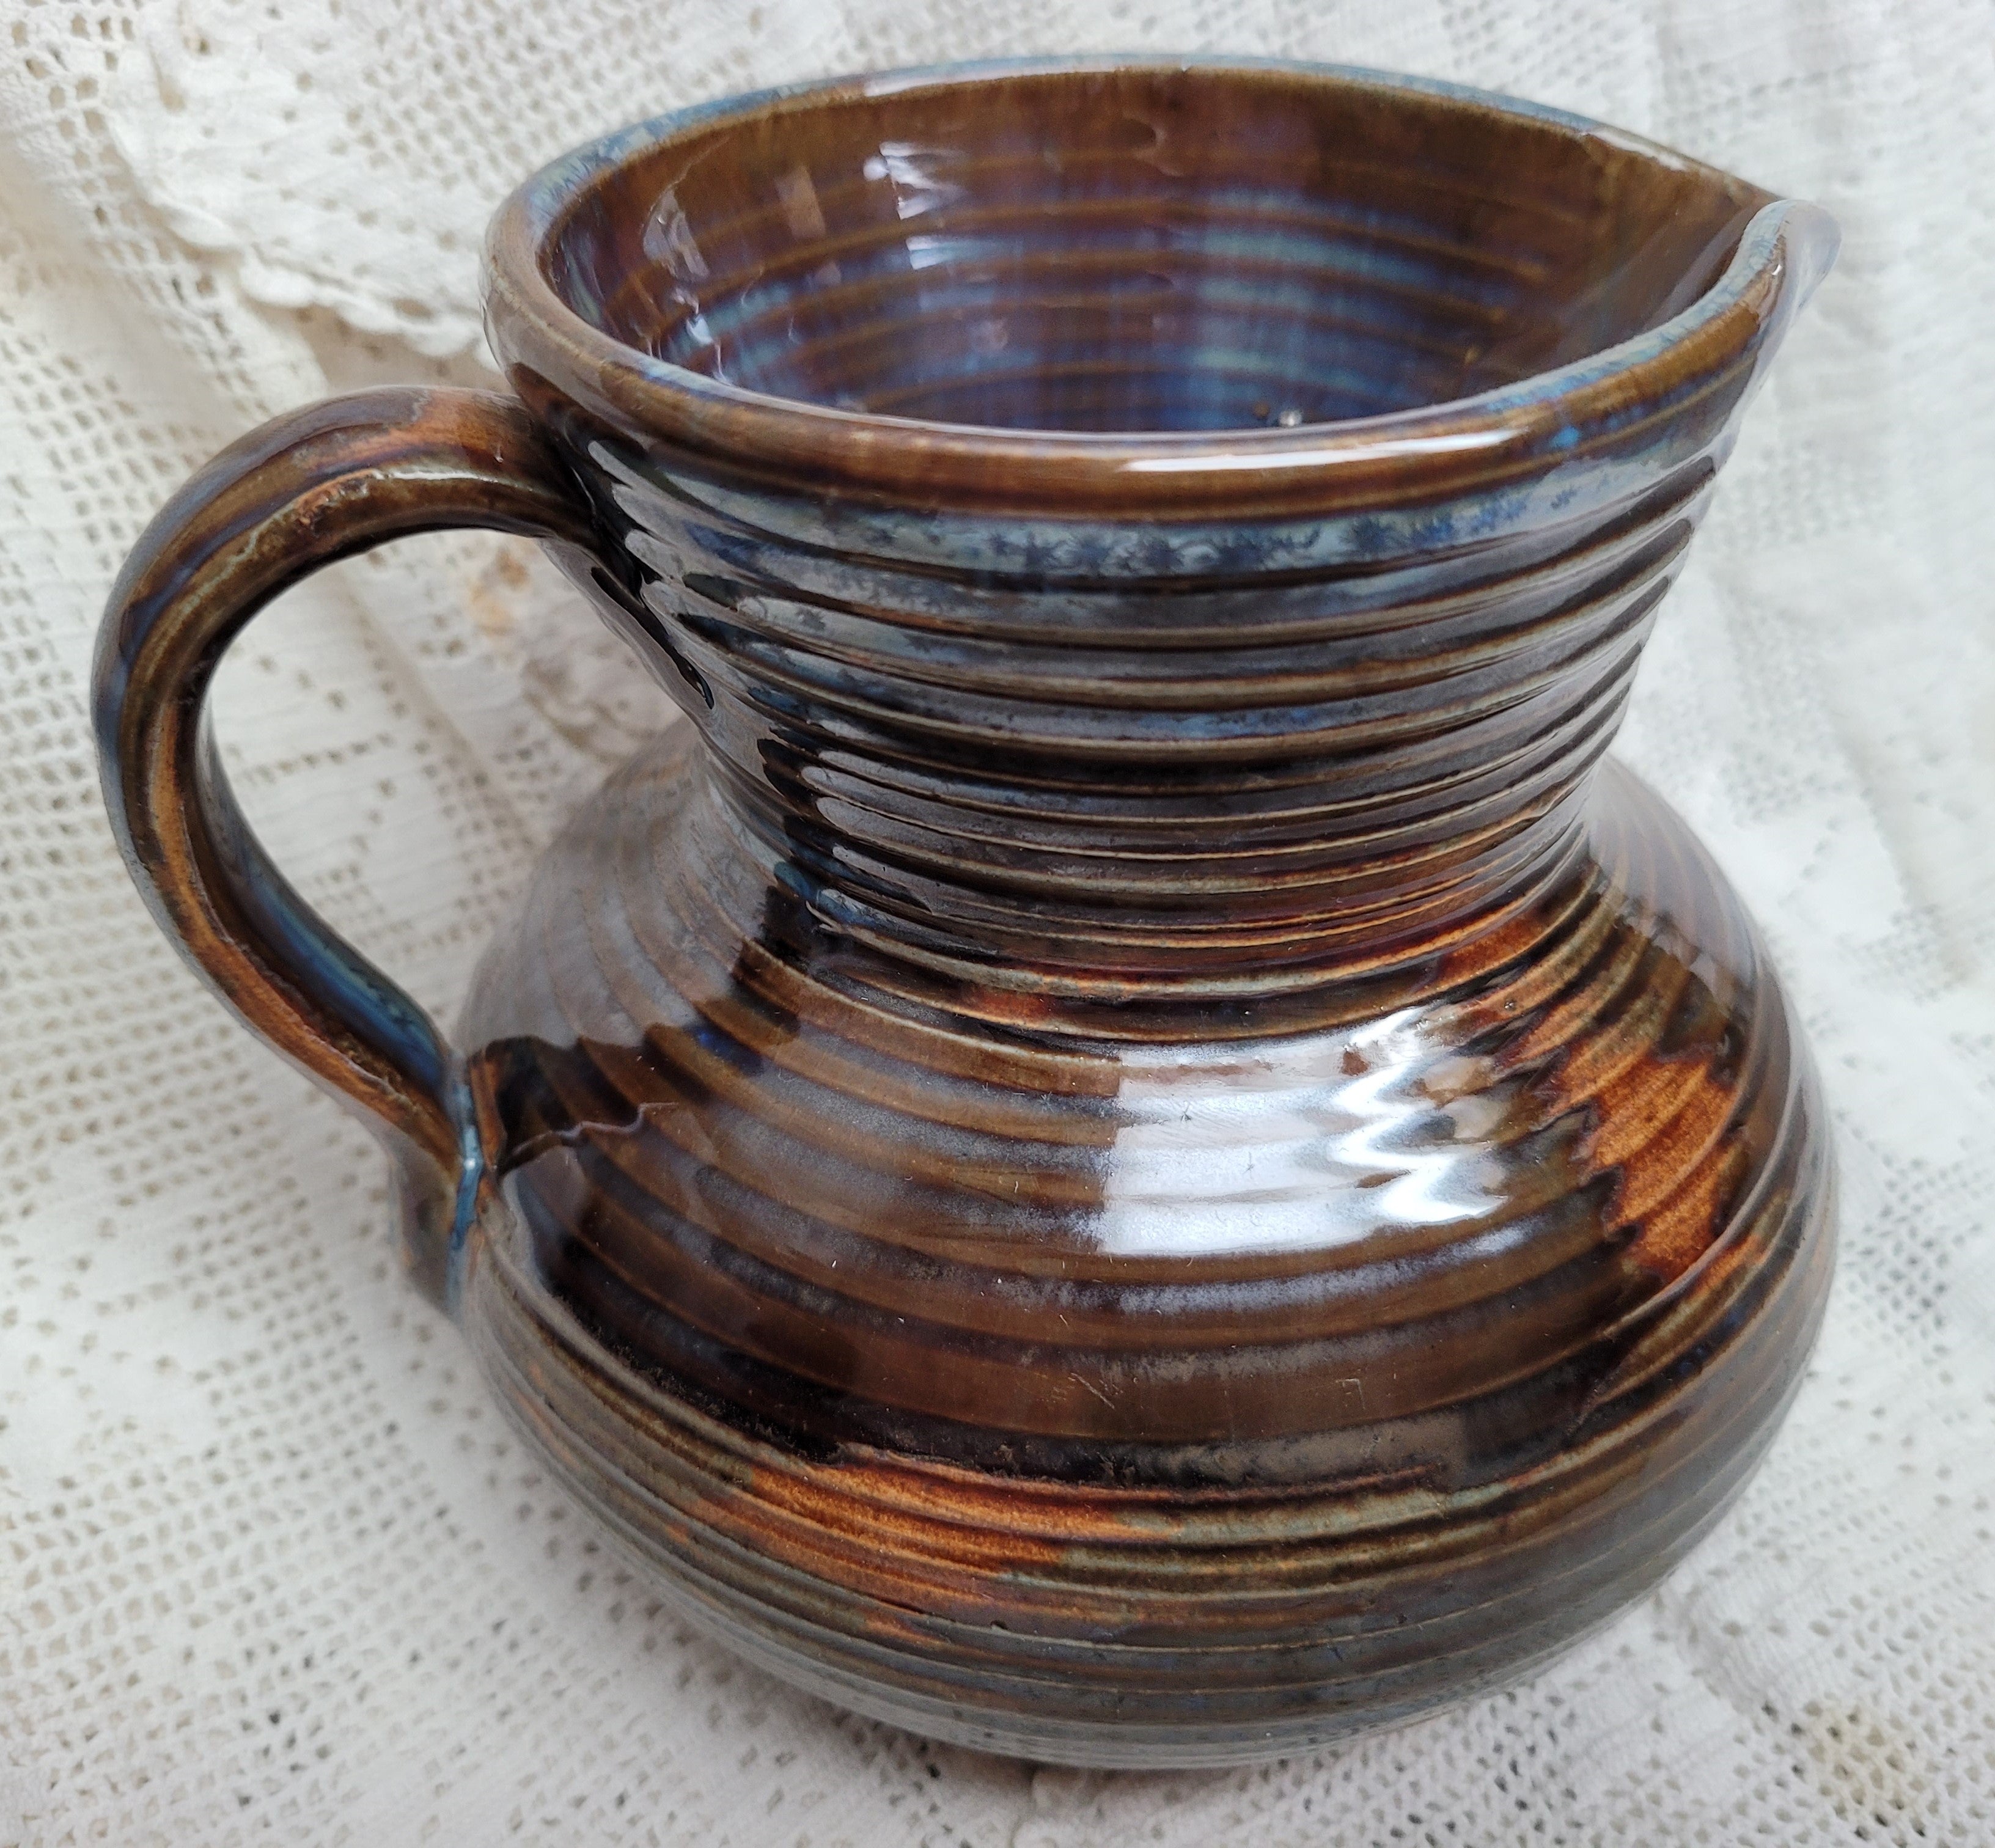 Vintage Fulper pottery pitcher